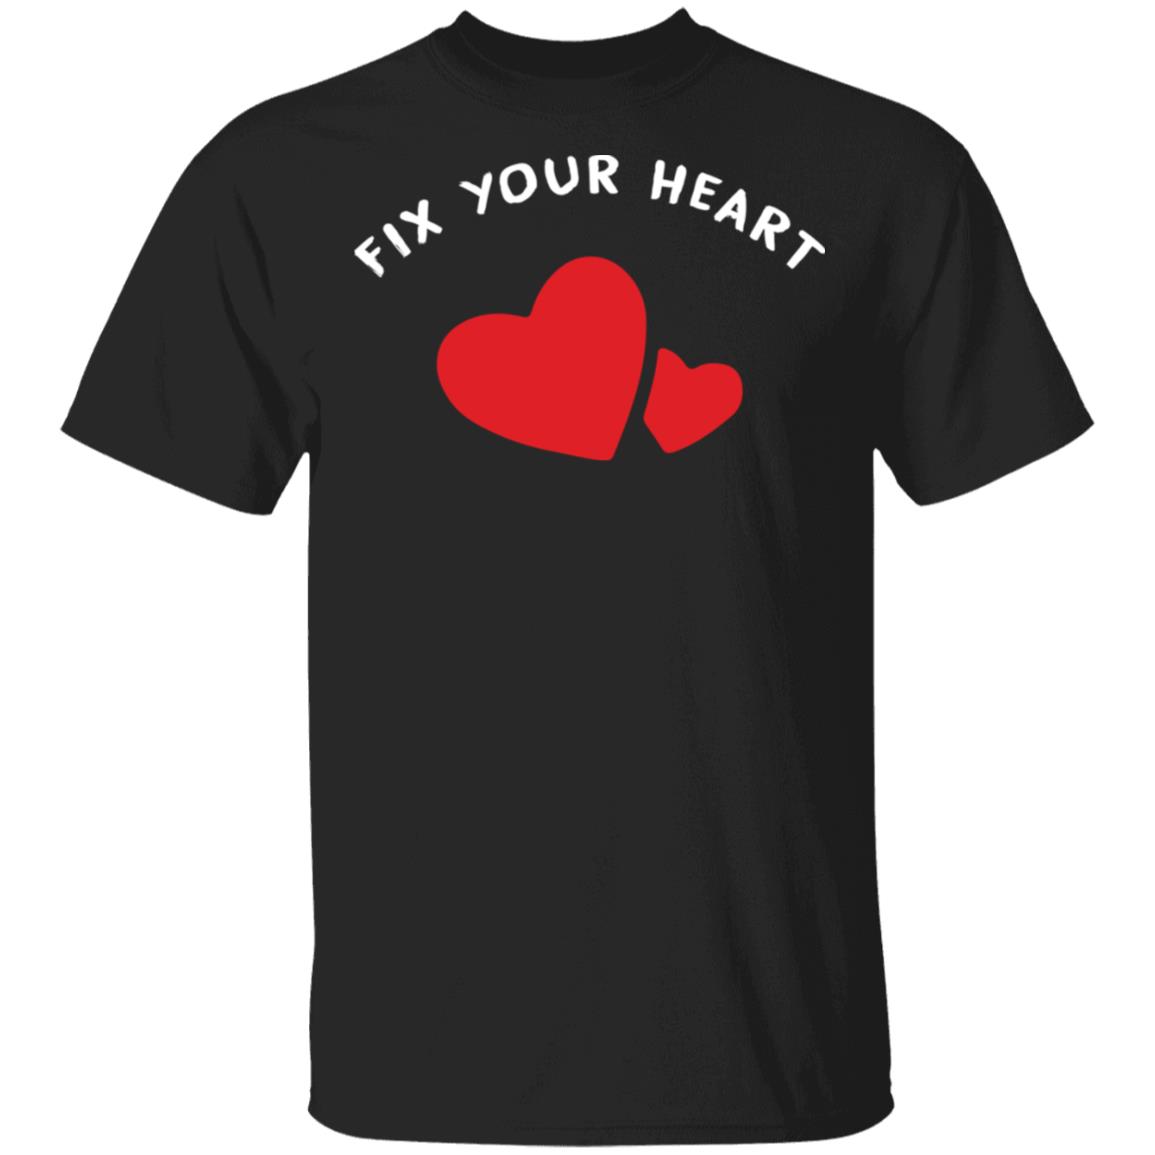 Fix your heart America shirt - Rockatee